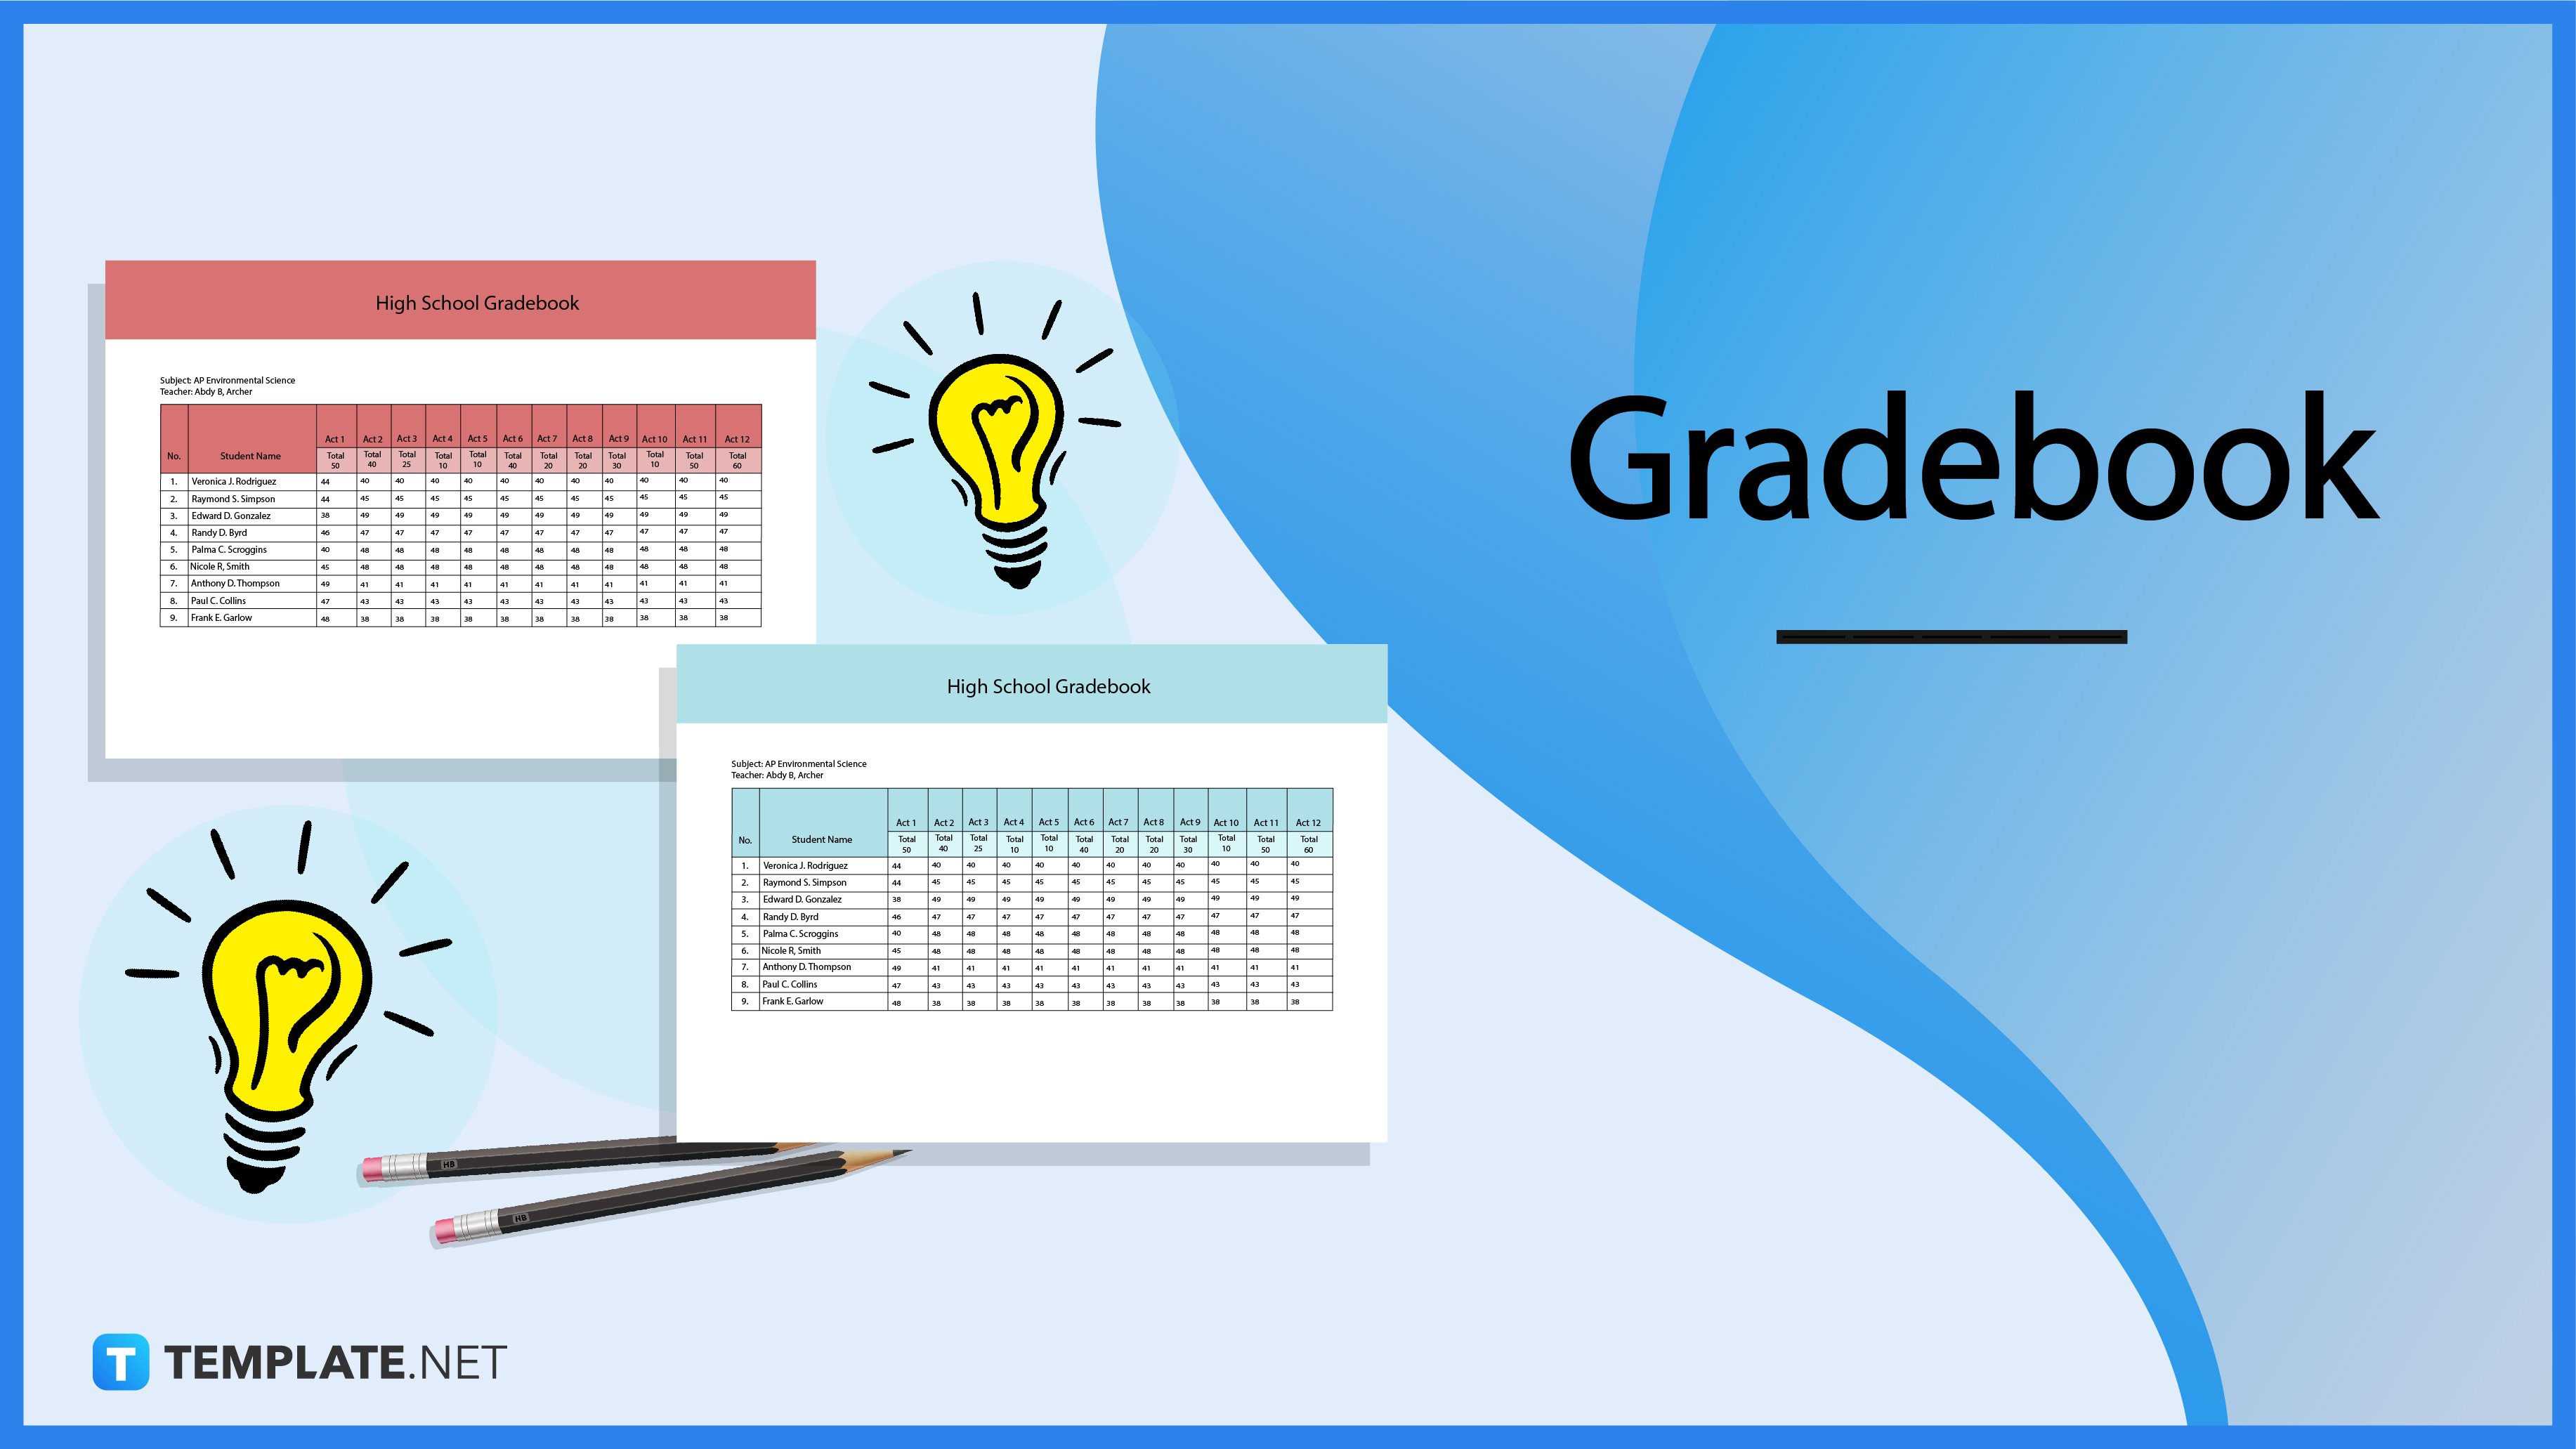 gradebook-what-is-a-gradebook-definition-types-uses